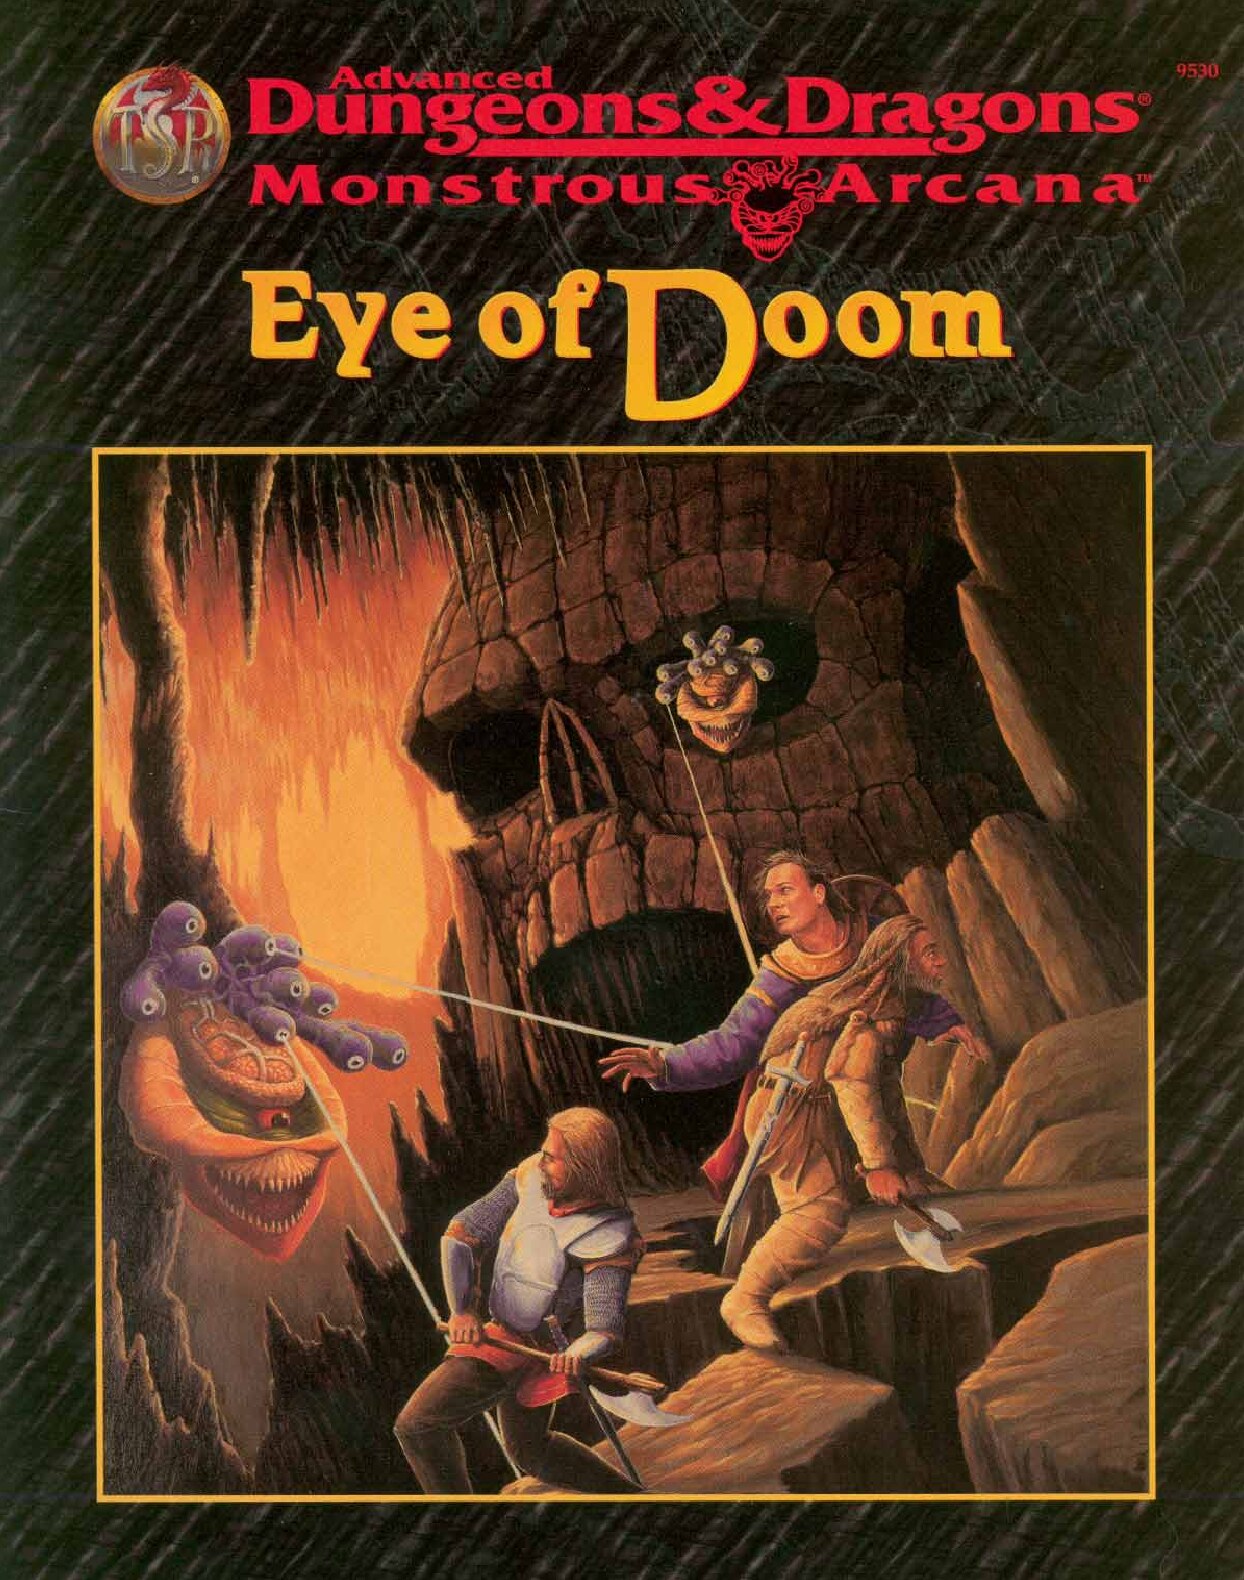 TSR 9530 Eye of Doom